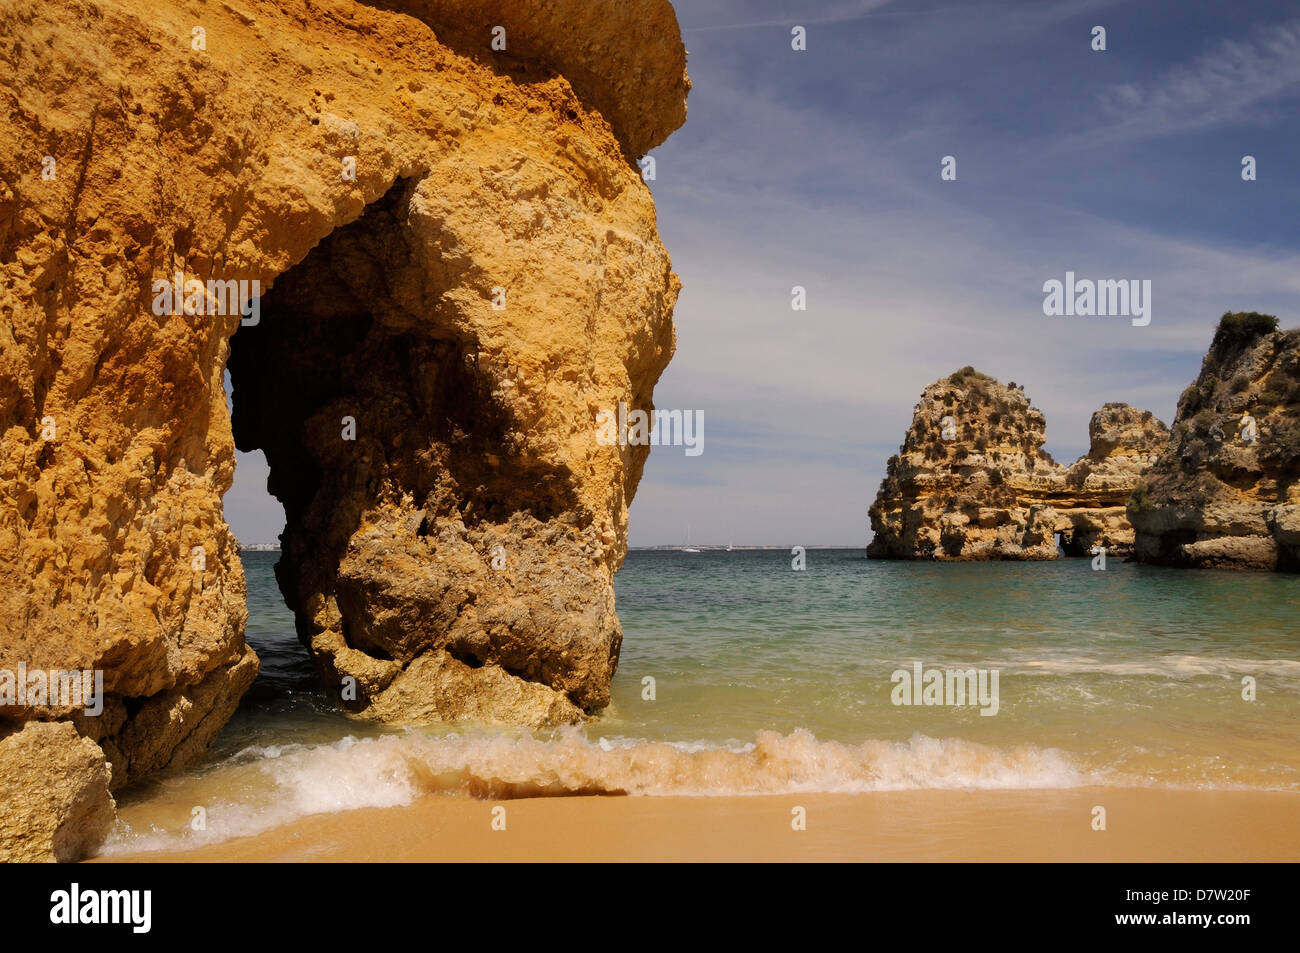 Rock archways at Praia do Camilo (Camel beach), Lagos, Algarve, Portugal Stock Photo